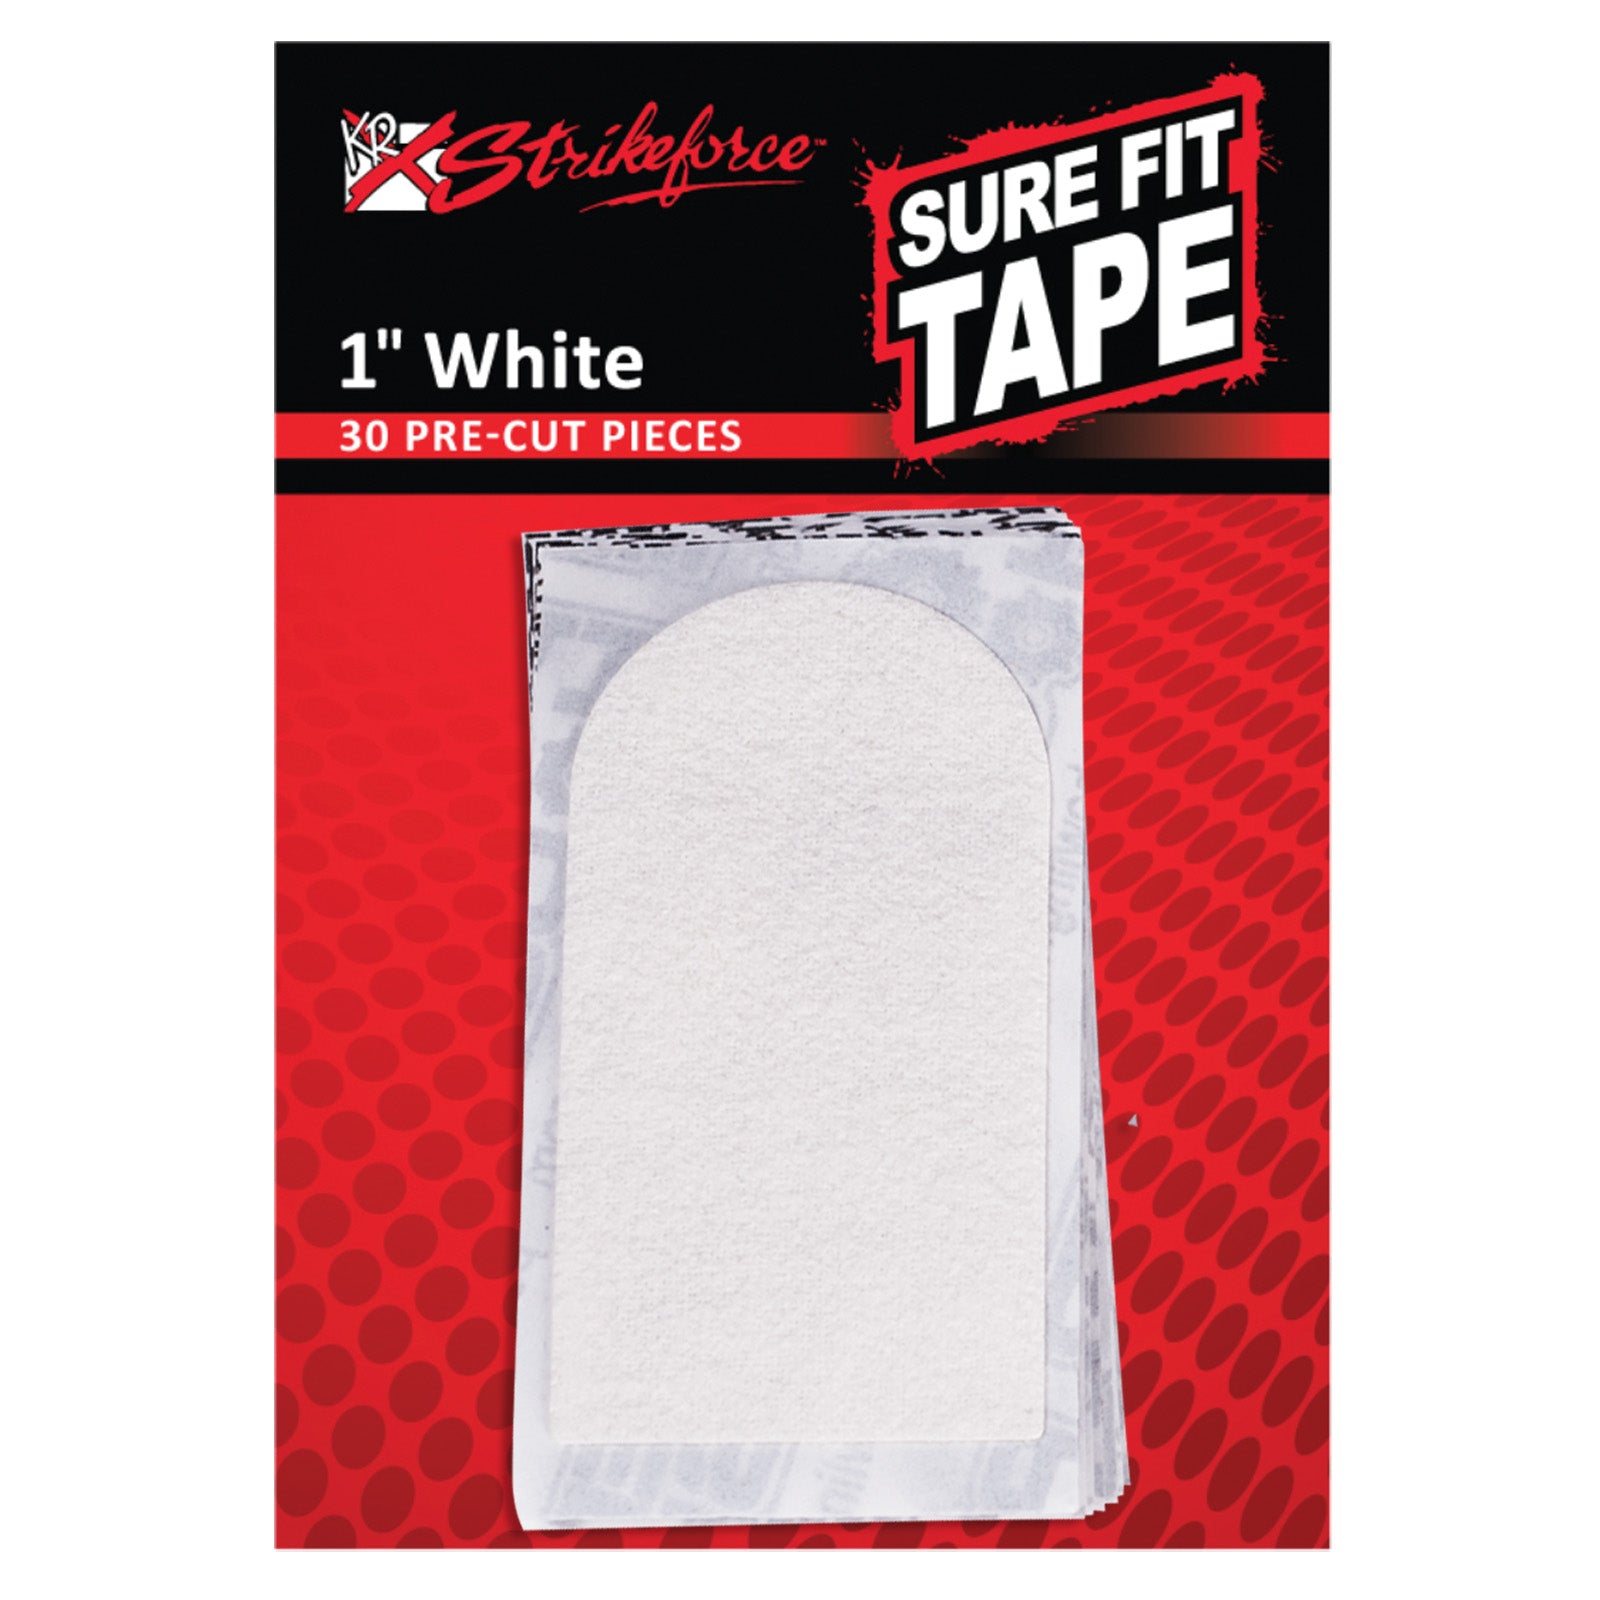 KR Sure Fit Tape 1" White 30 PC